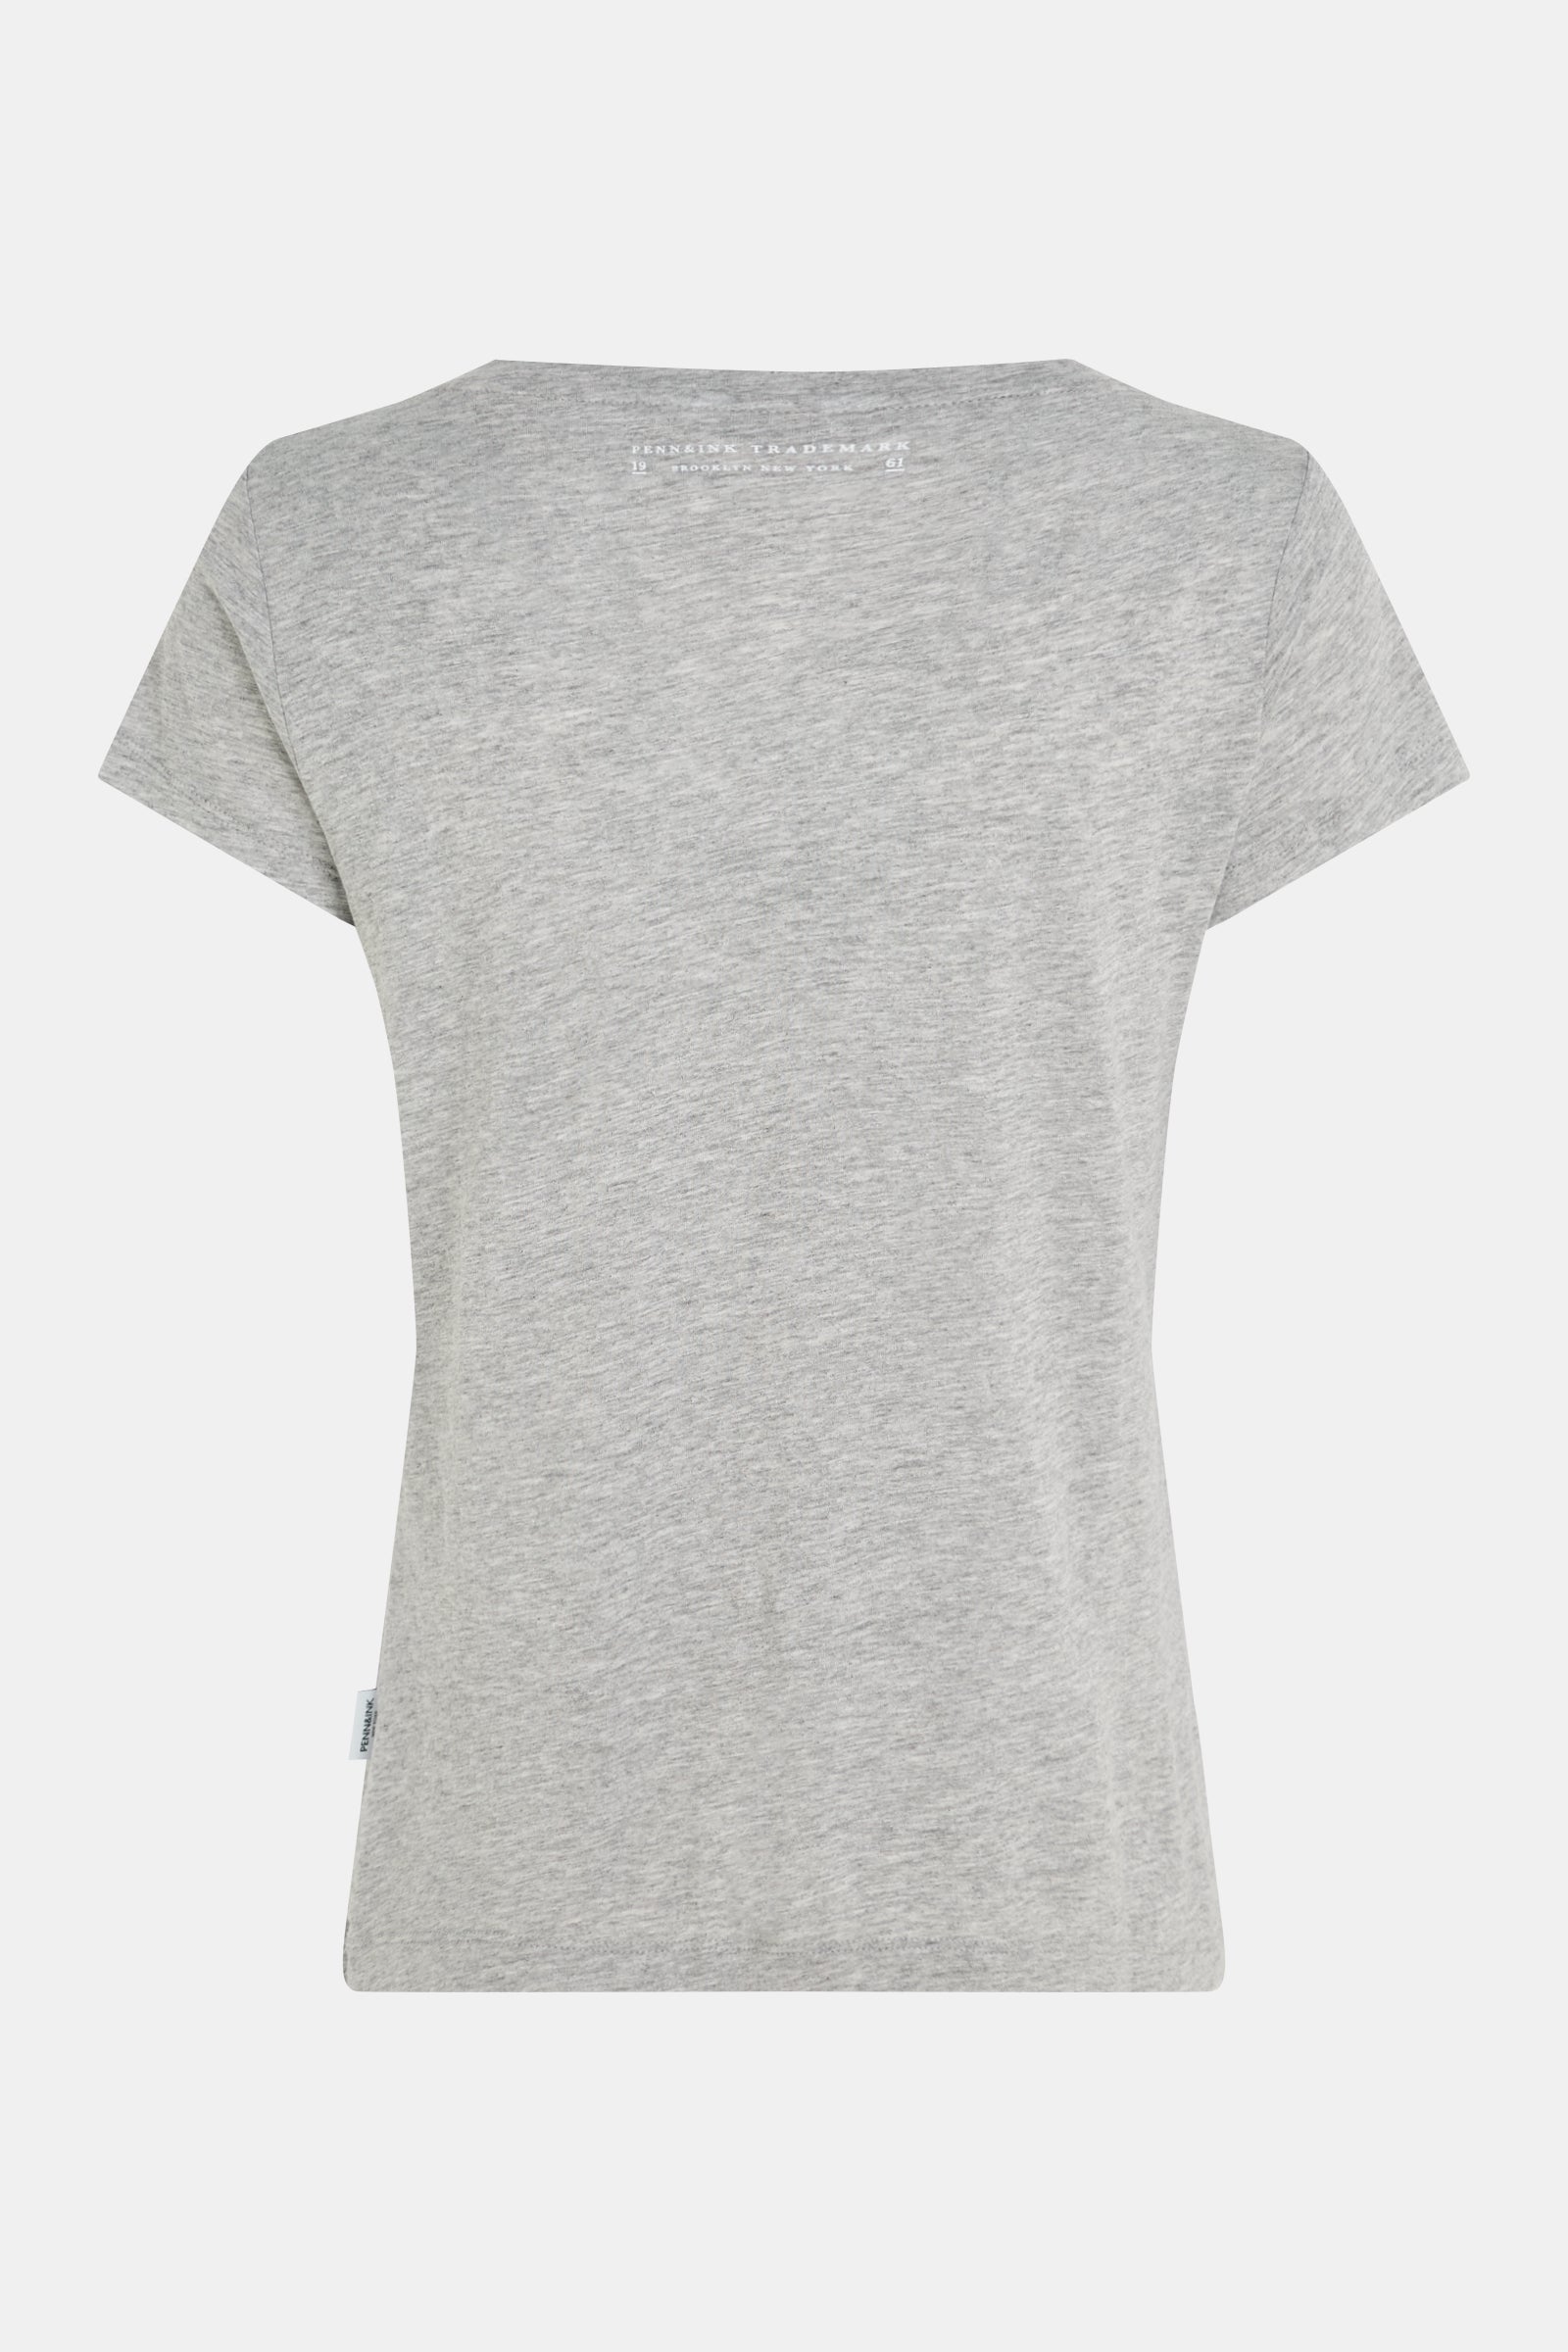 packshot back: T-Shirt Print (23F1317LAB) Grey Melange - White | Penn&Ink N.Y.